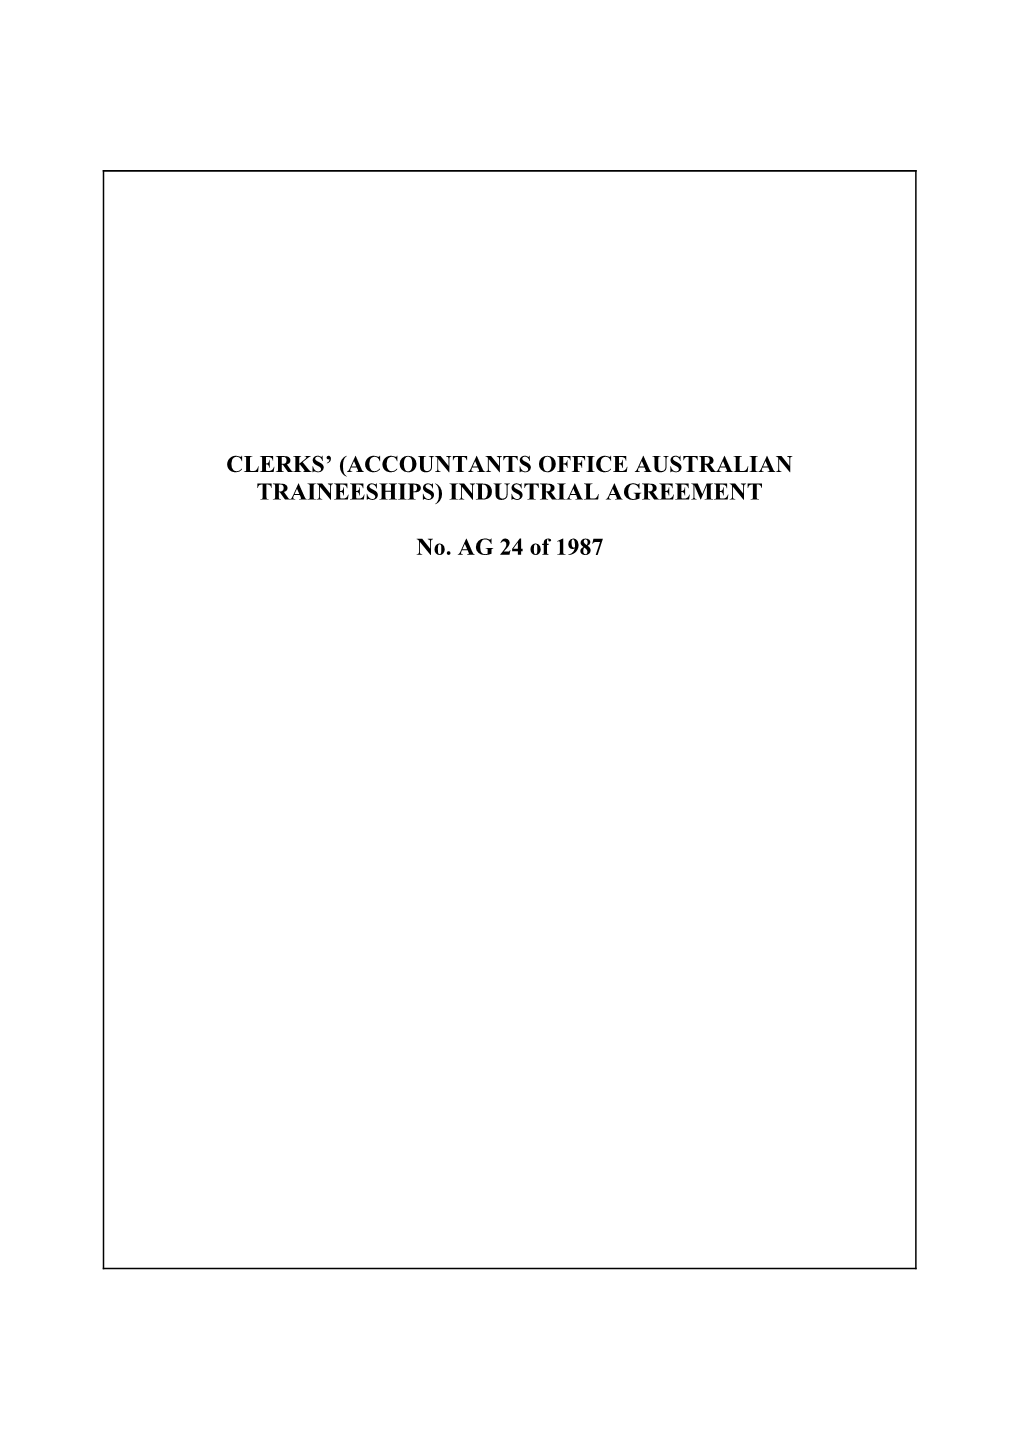 Clerks' (Accountants Office Australian Traineeships) Industrial Agreement